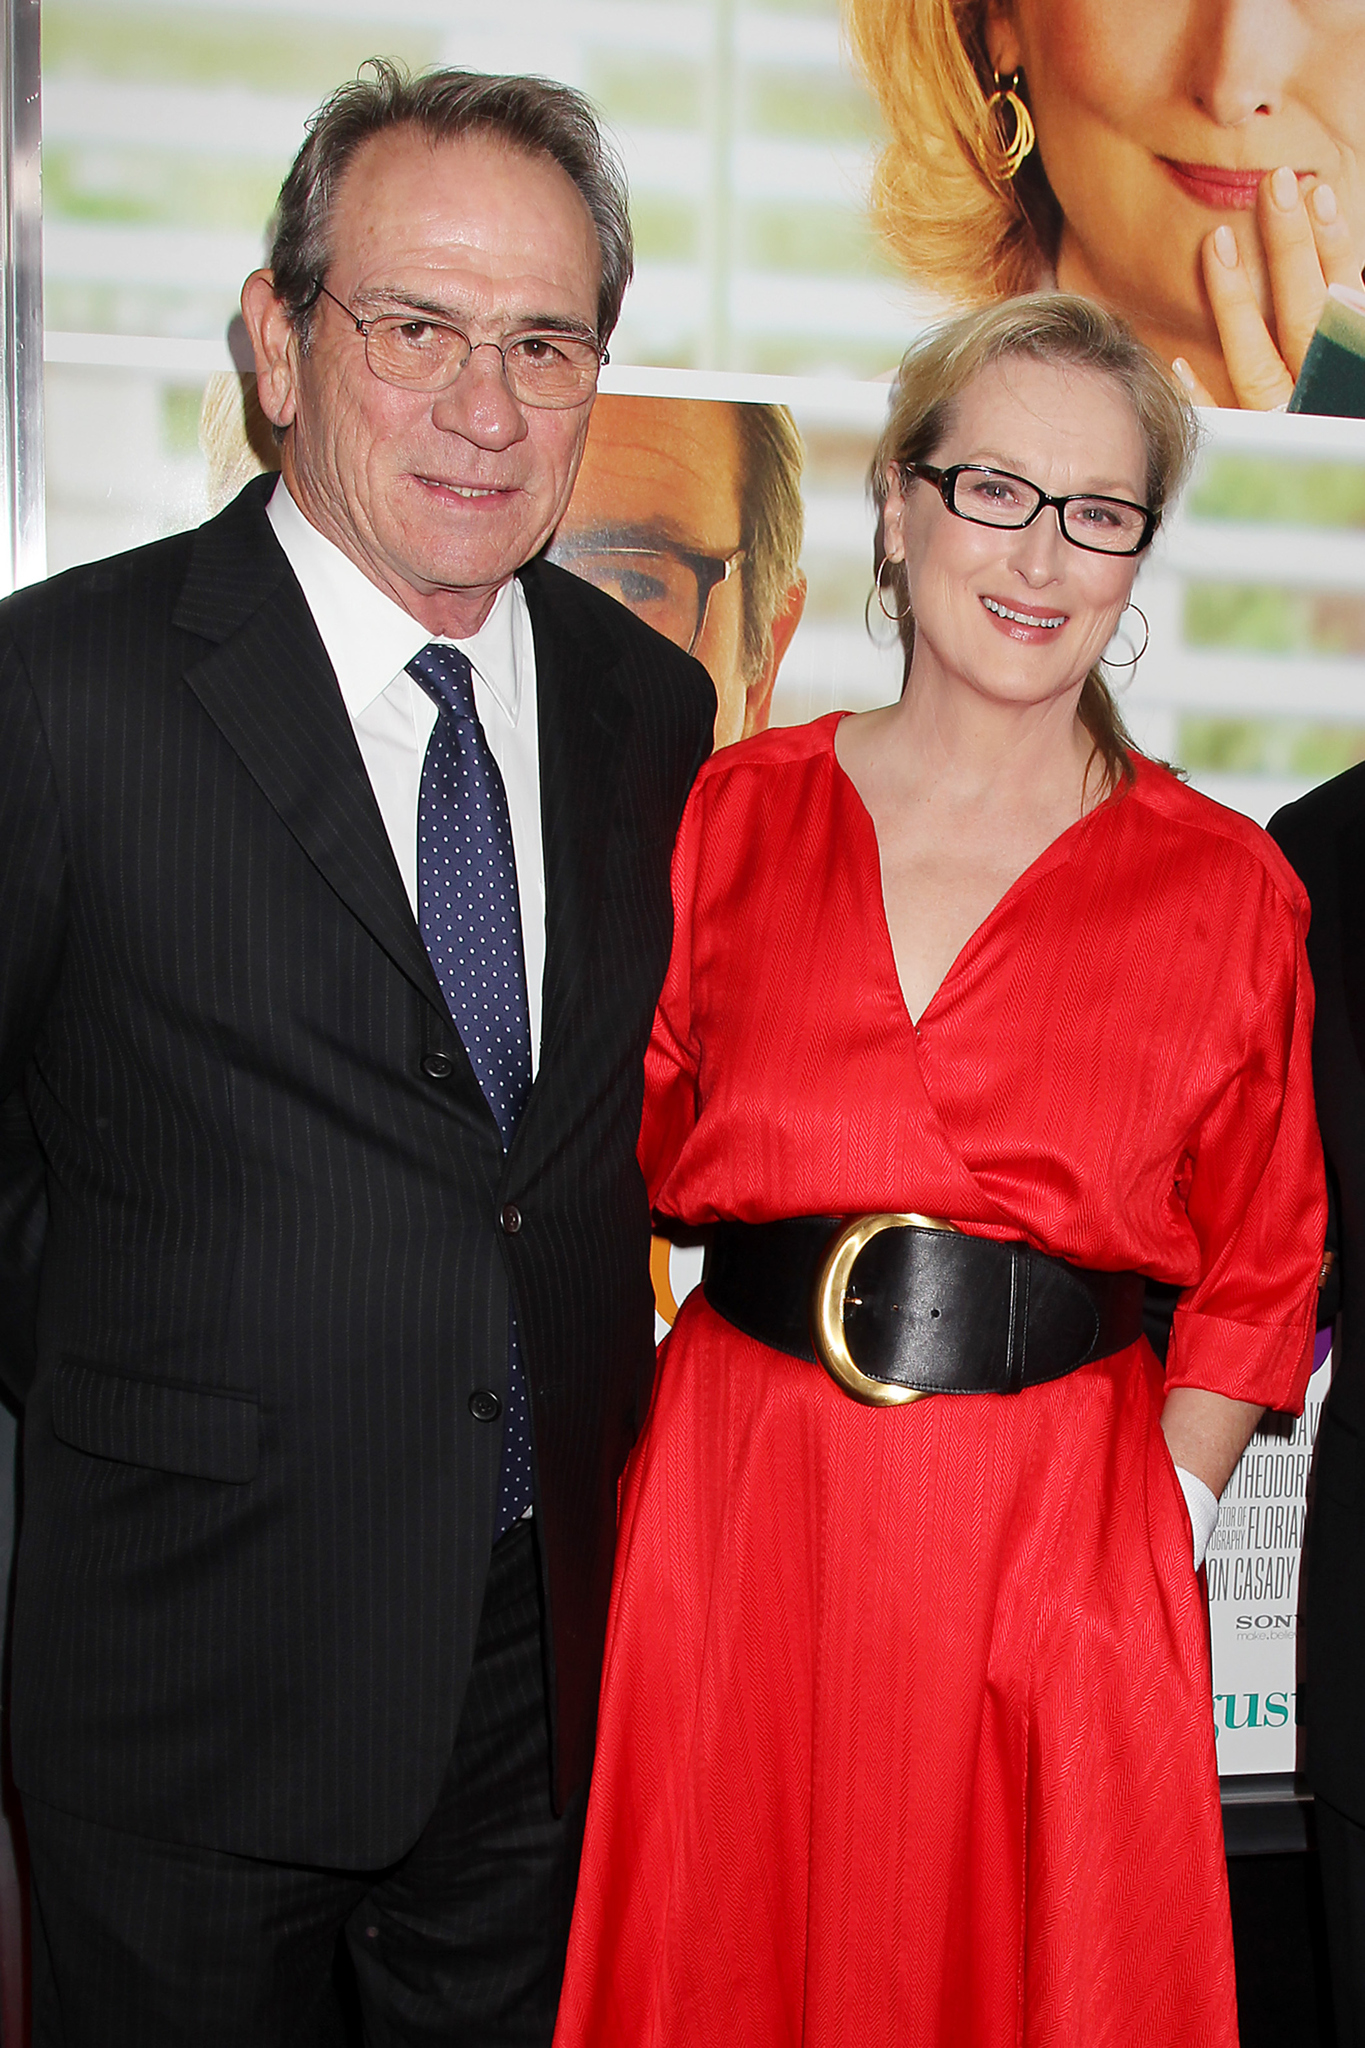 Tommy Lee Jones and Meryl Streep at event of Hope Springs (2012)